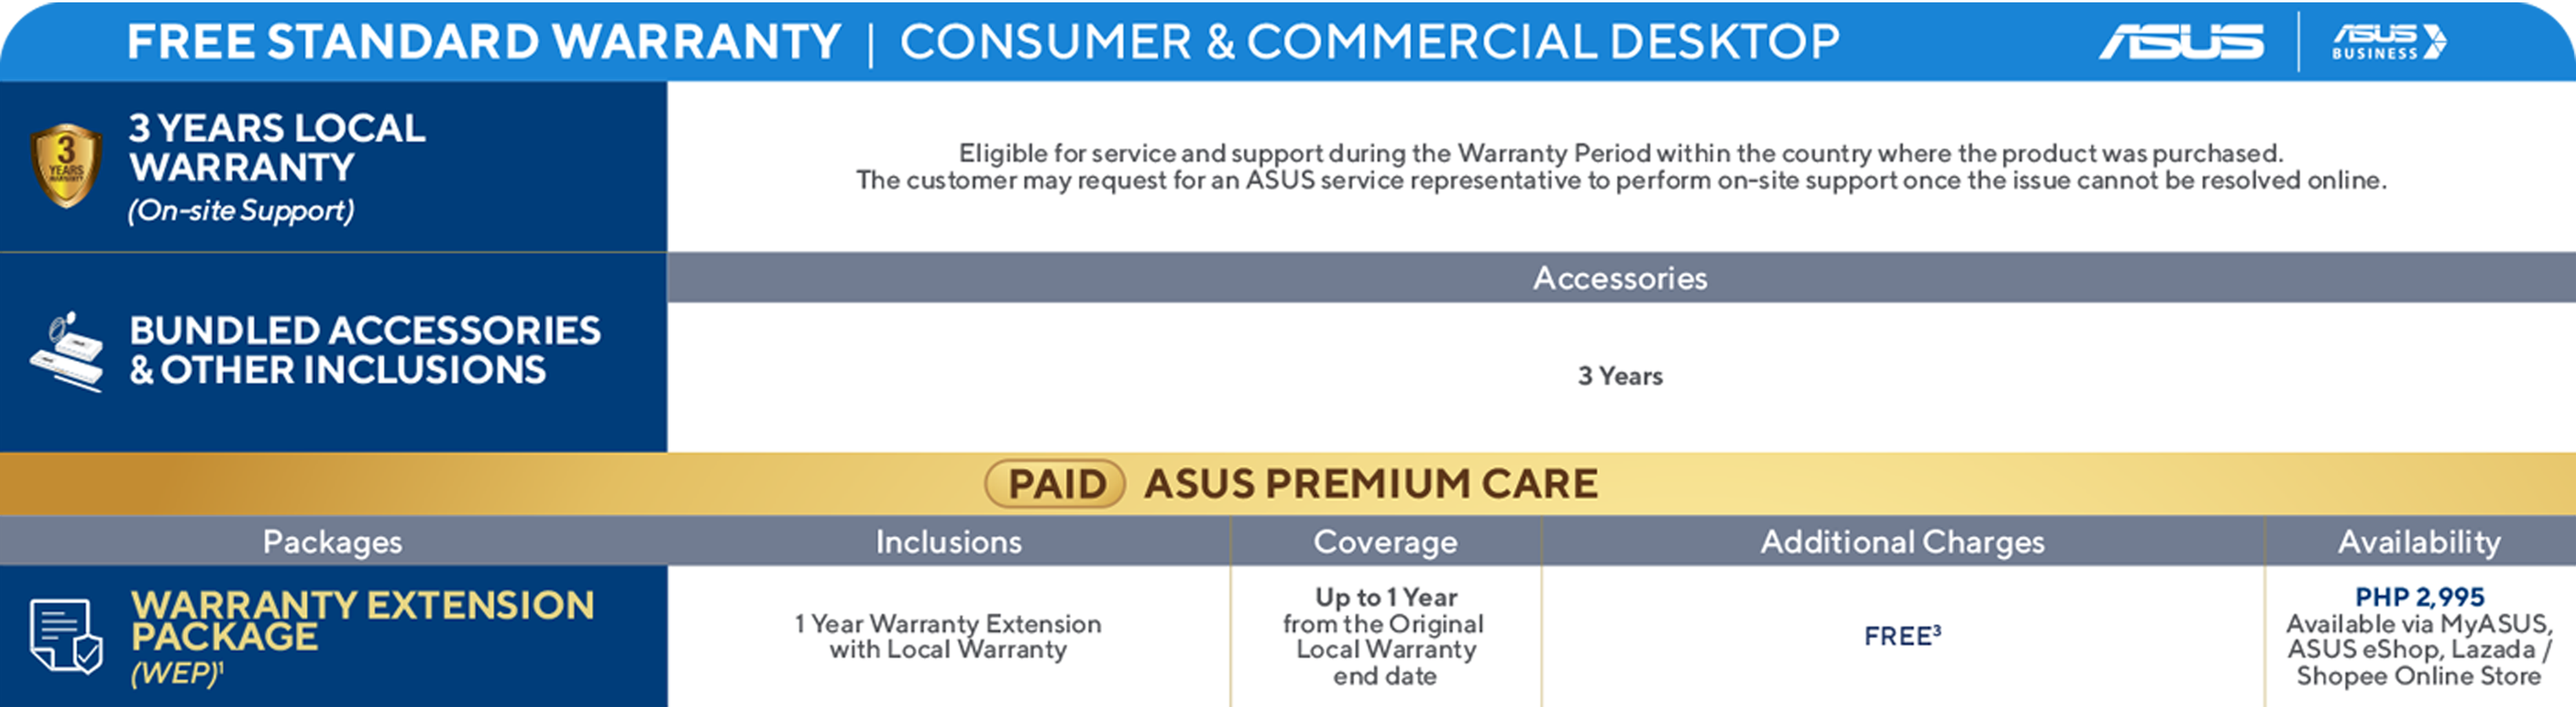 Free Standard Warranty | Consumer & Commercial Desktop